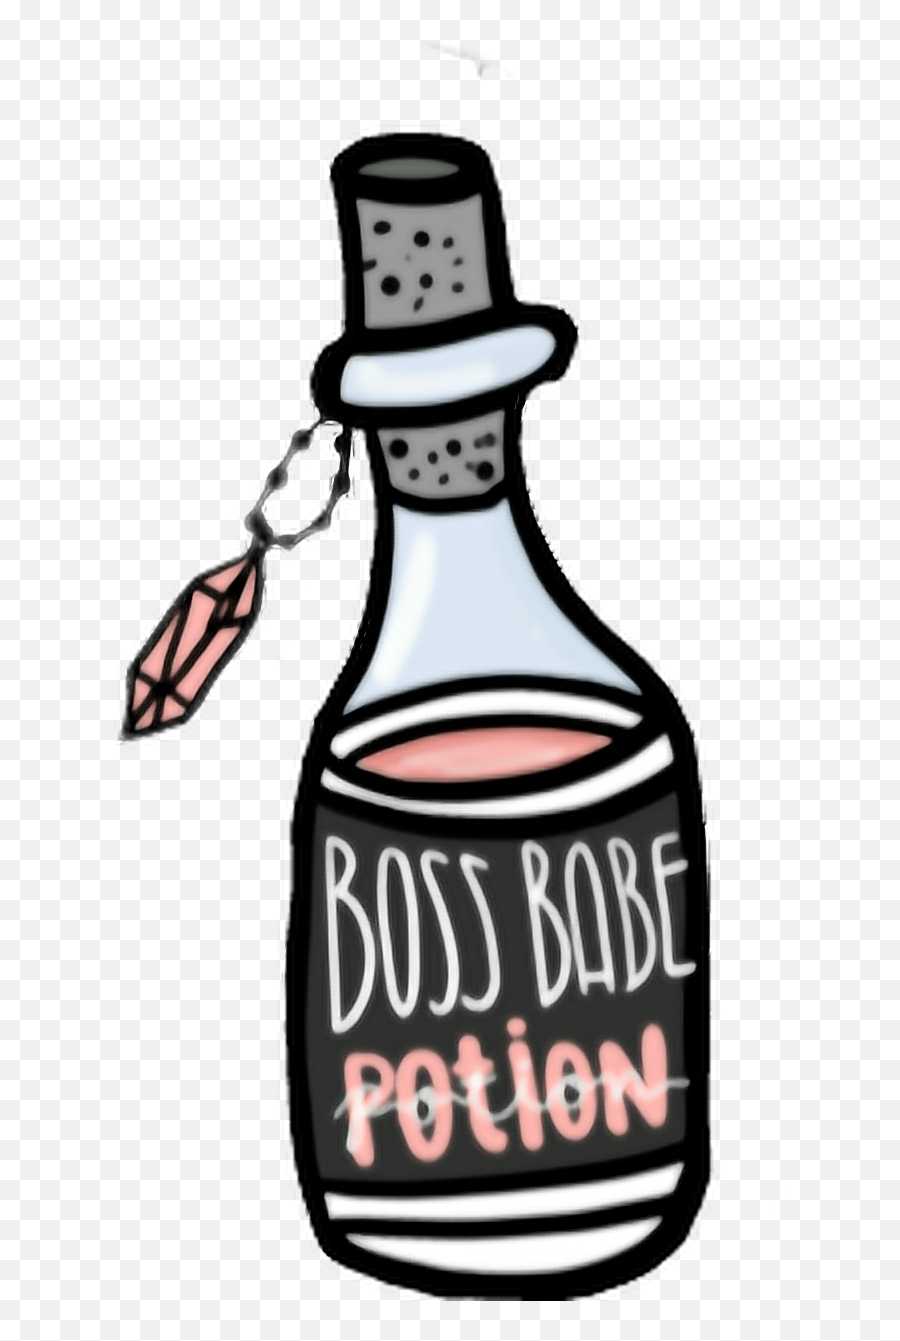 Boss Babe Potion Bottle Sticker By Pixiella - Syrup Emoji,Potion Emoji